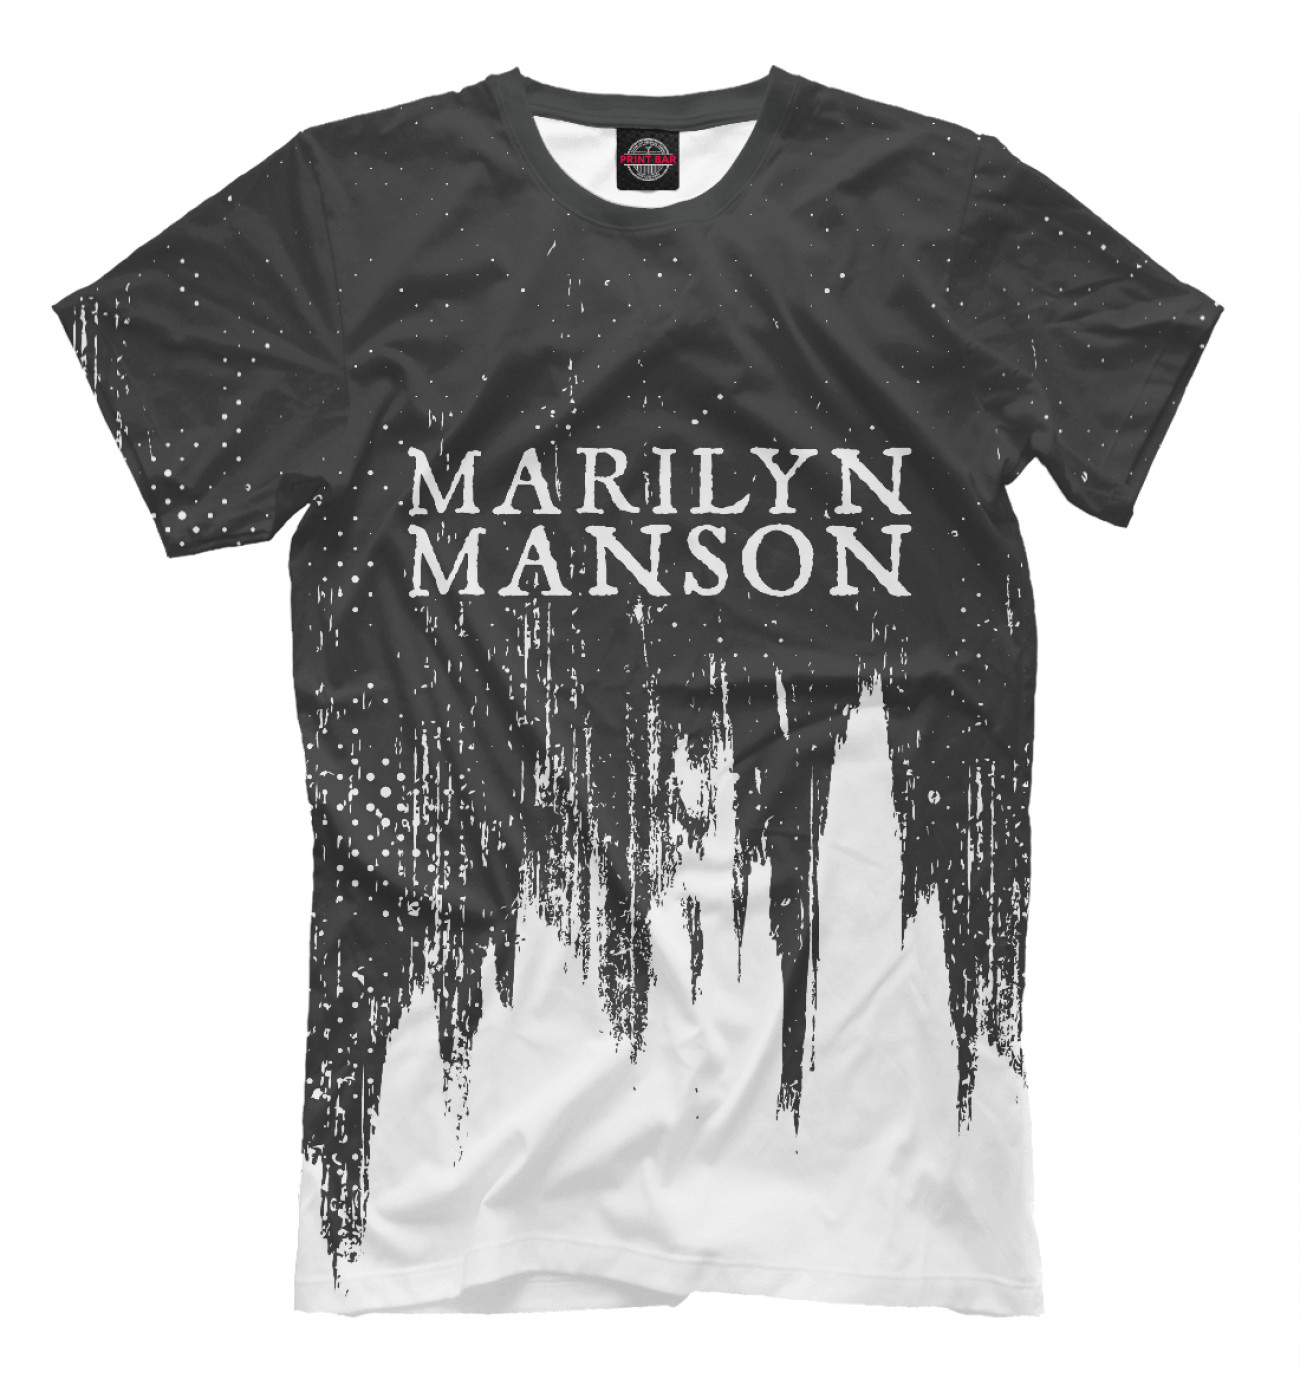 Мужская Футболка Marilyn Manson / М. Мэнсон, артикул: MRM-754187-fut-2